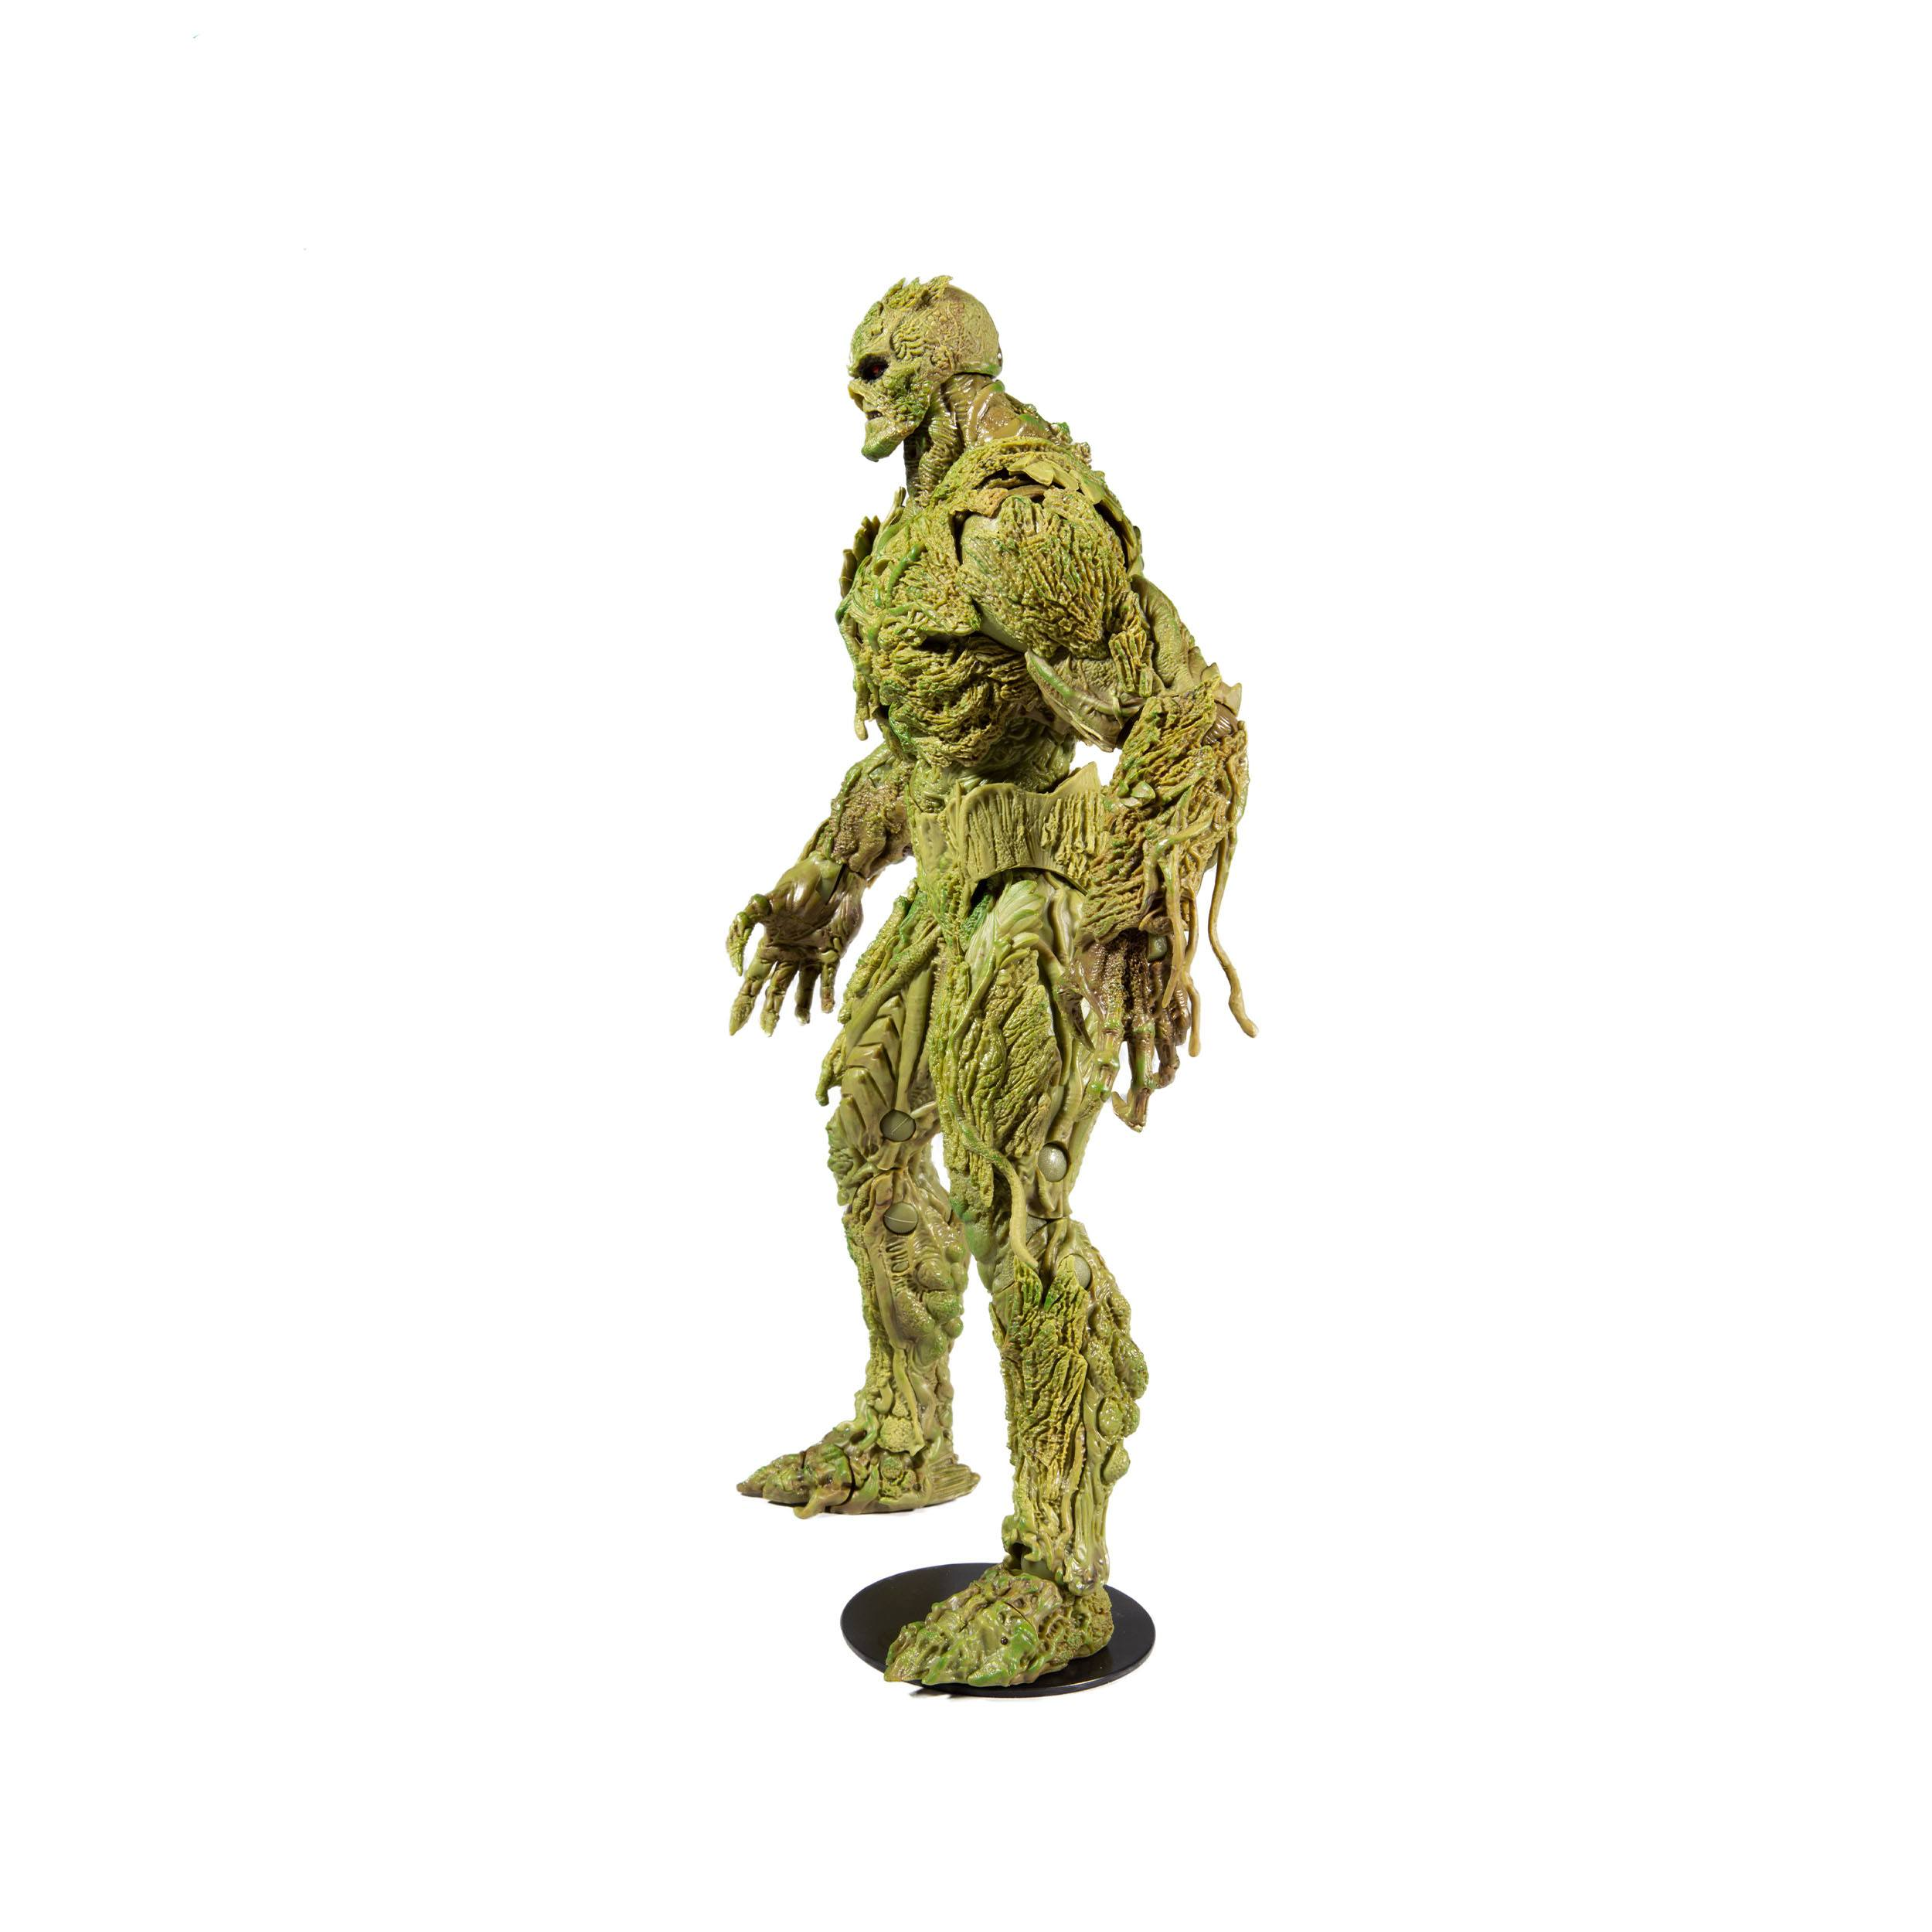 30 Swamp TOYS Multiverse Action DC Actionfigur Thing cm MCFARLANE Deluxe Figur: